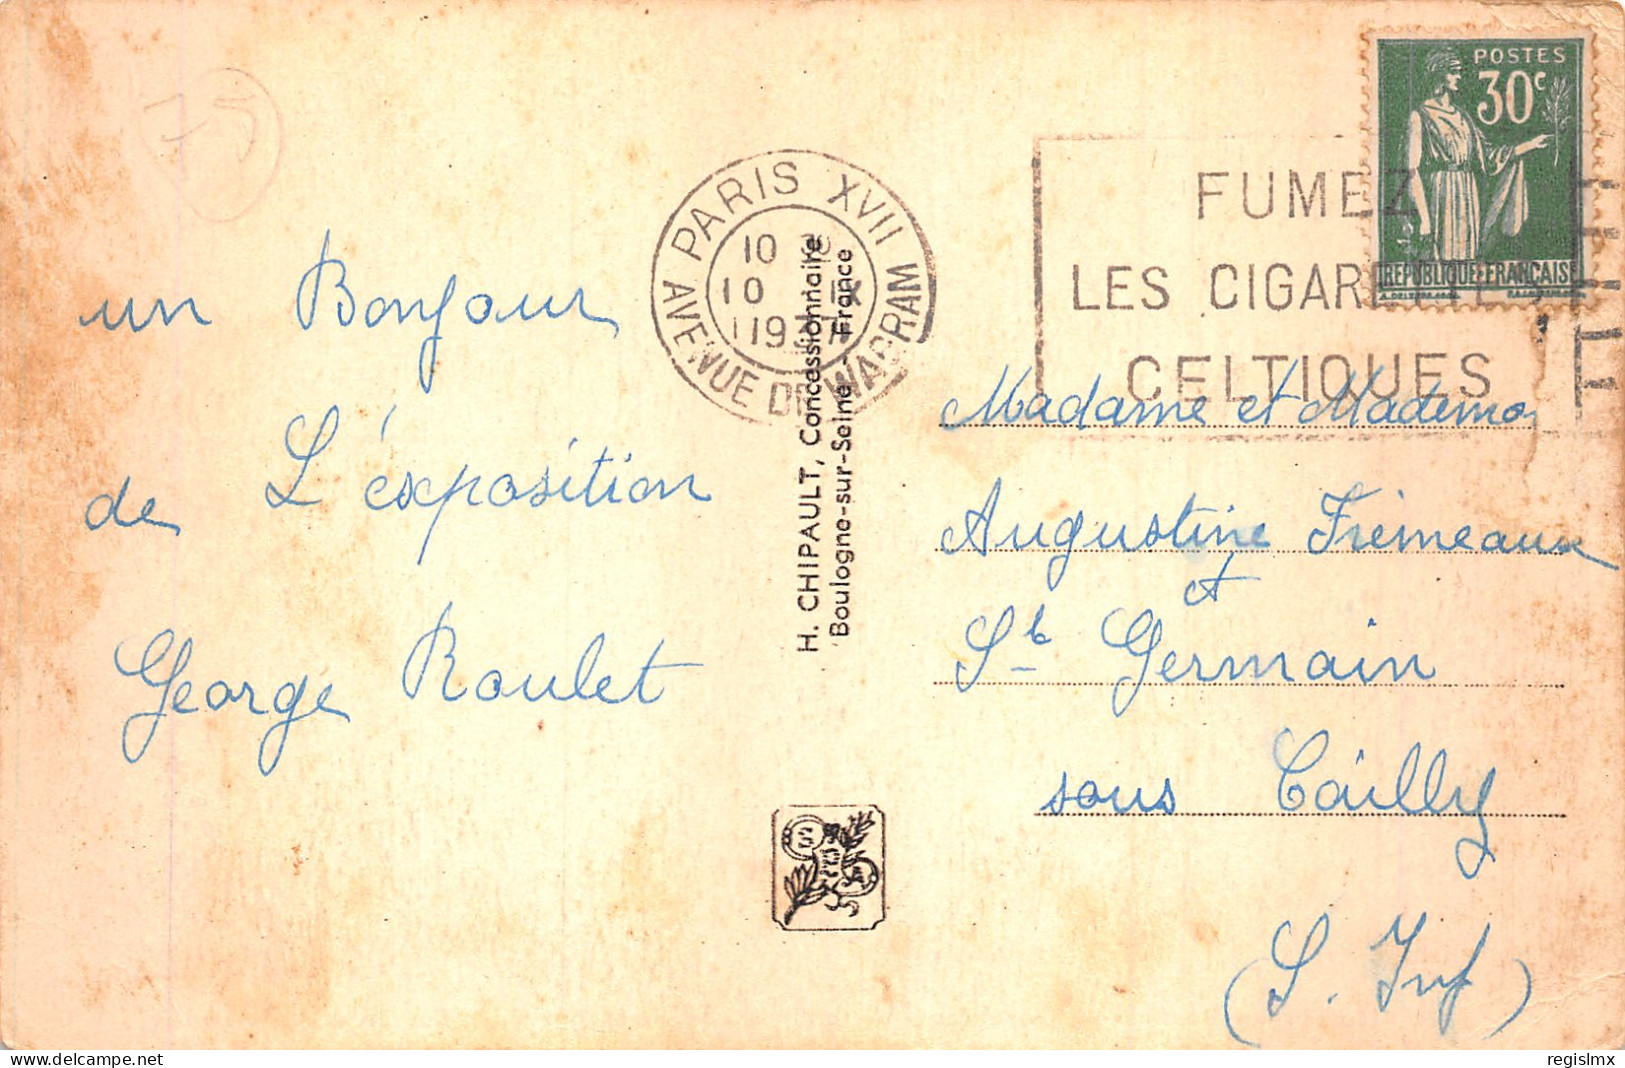 75-PARIS EXPOSITION INTERNATIONALE 1937-N°T1045-B/0293 - Expositions